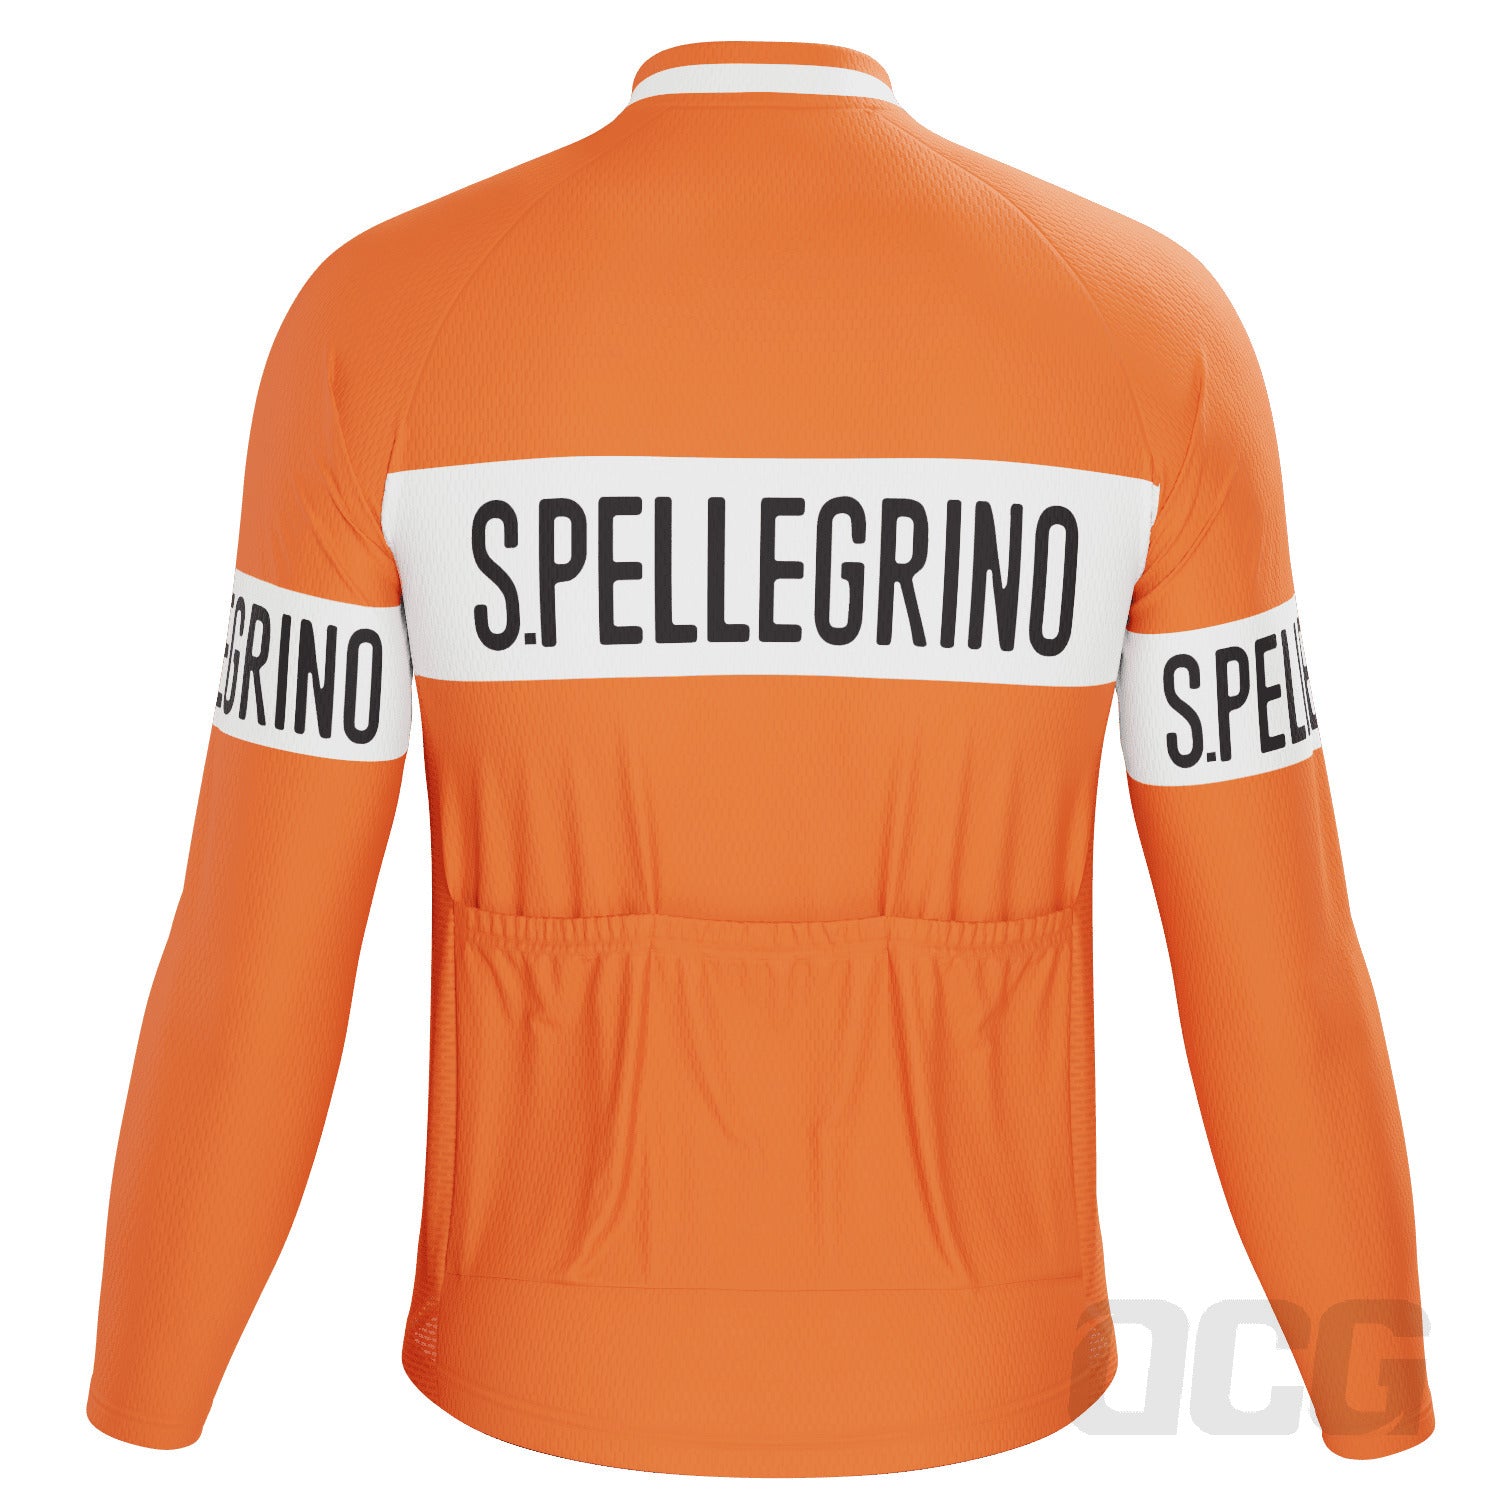 Men's Retro 1976 San Pellegrino Long Sleeve Cycling Jersey